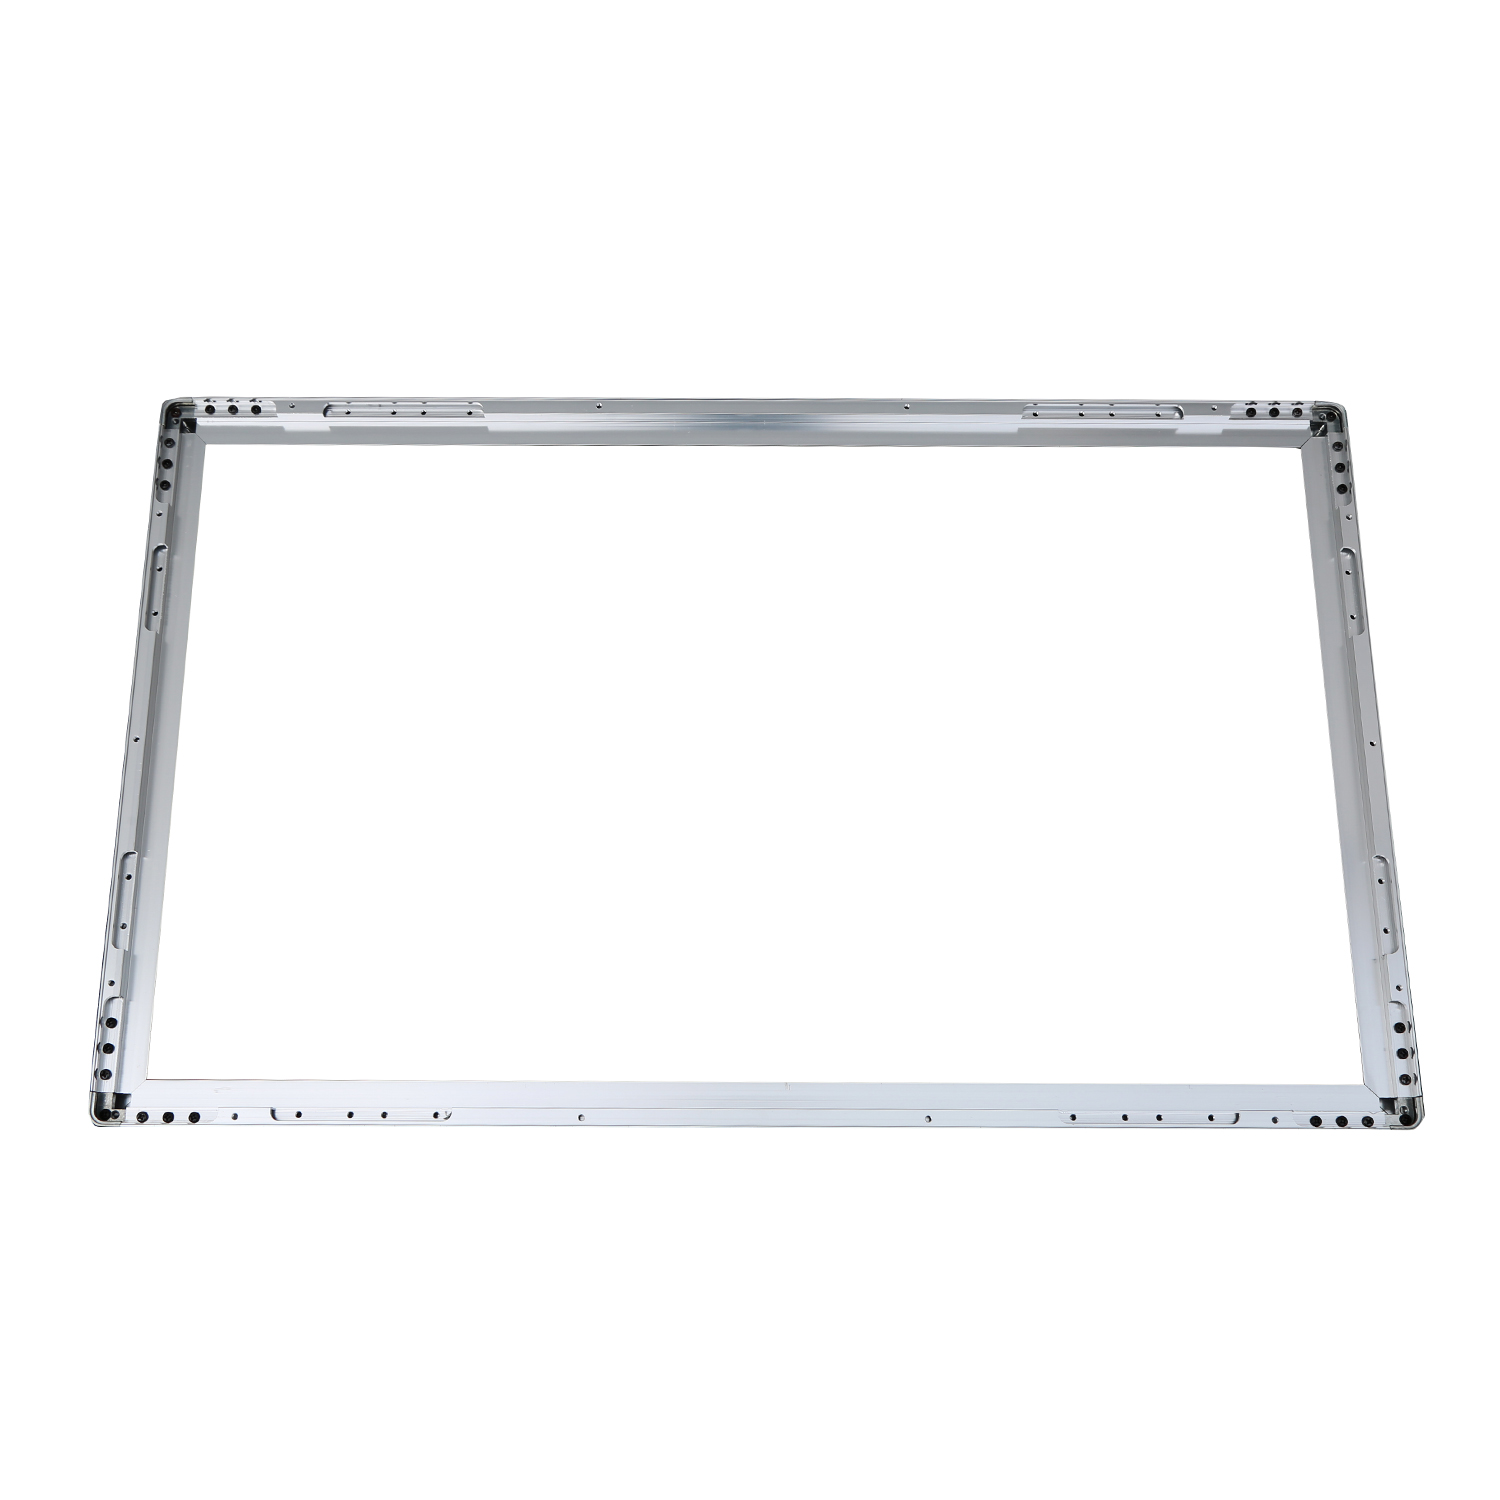 Aluminum extrusion profile for framing